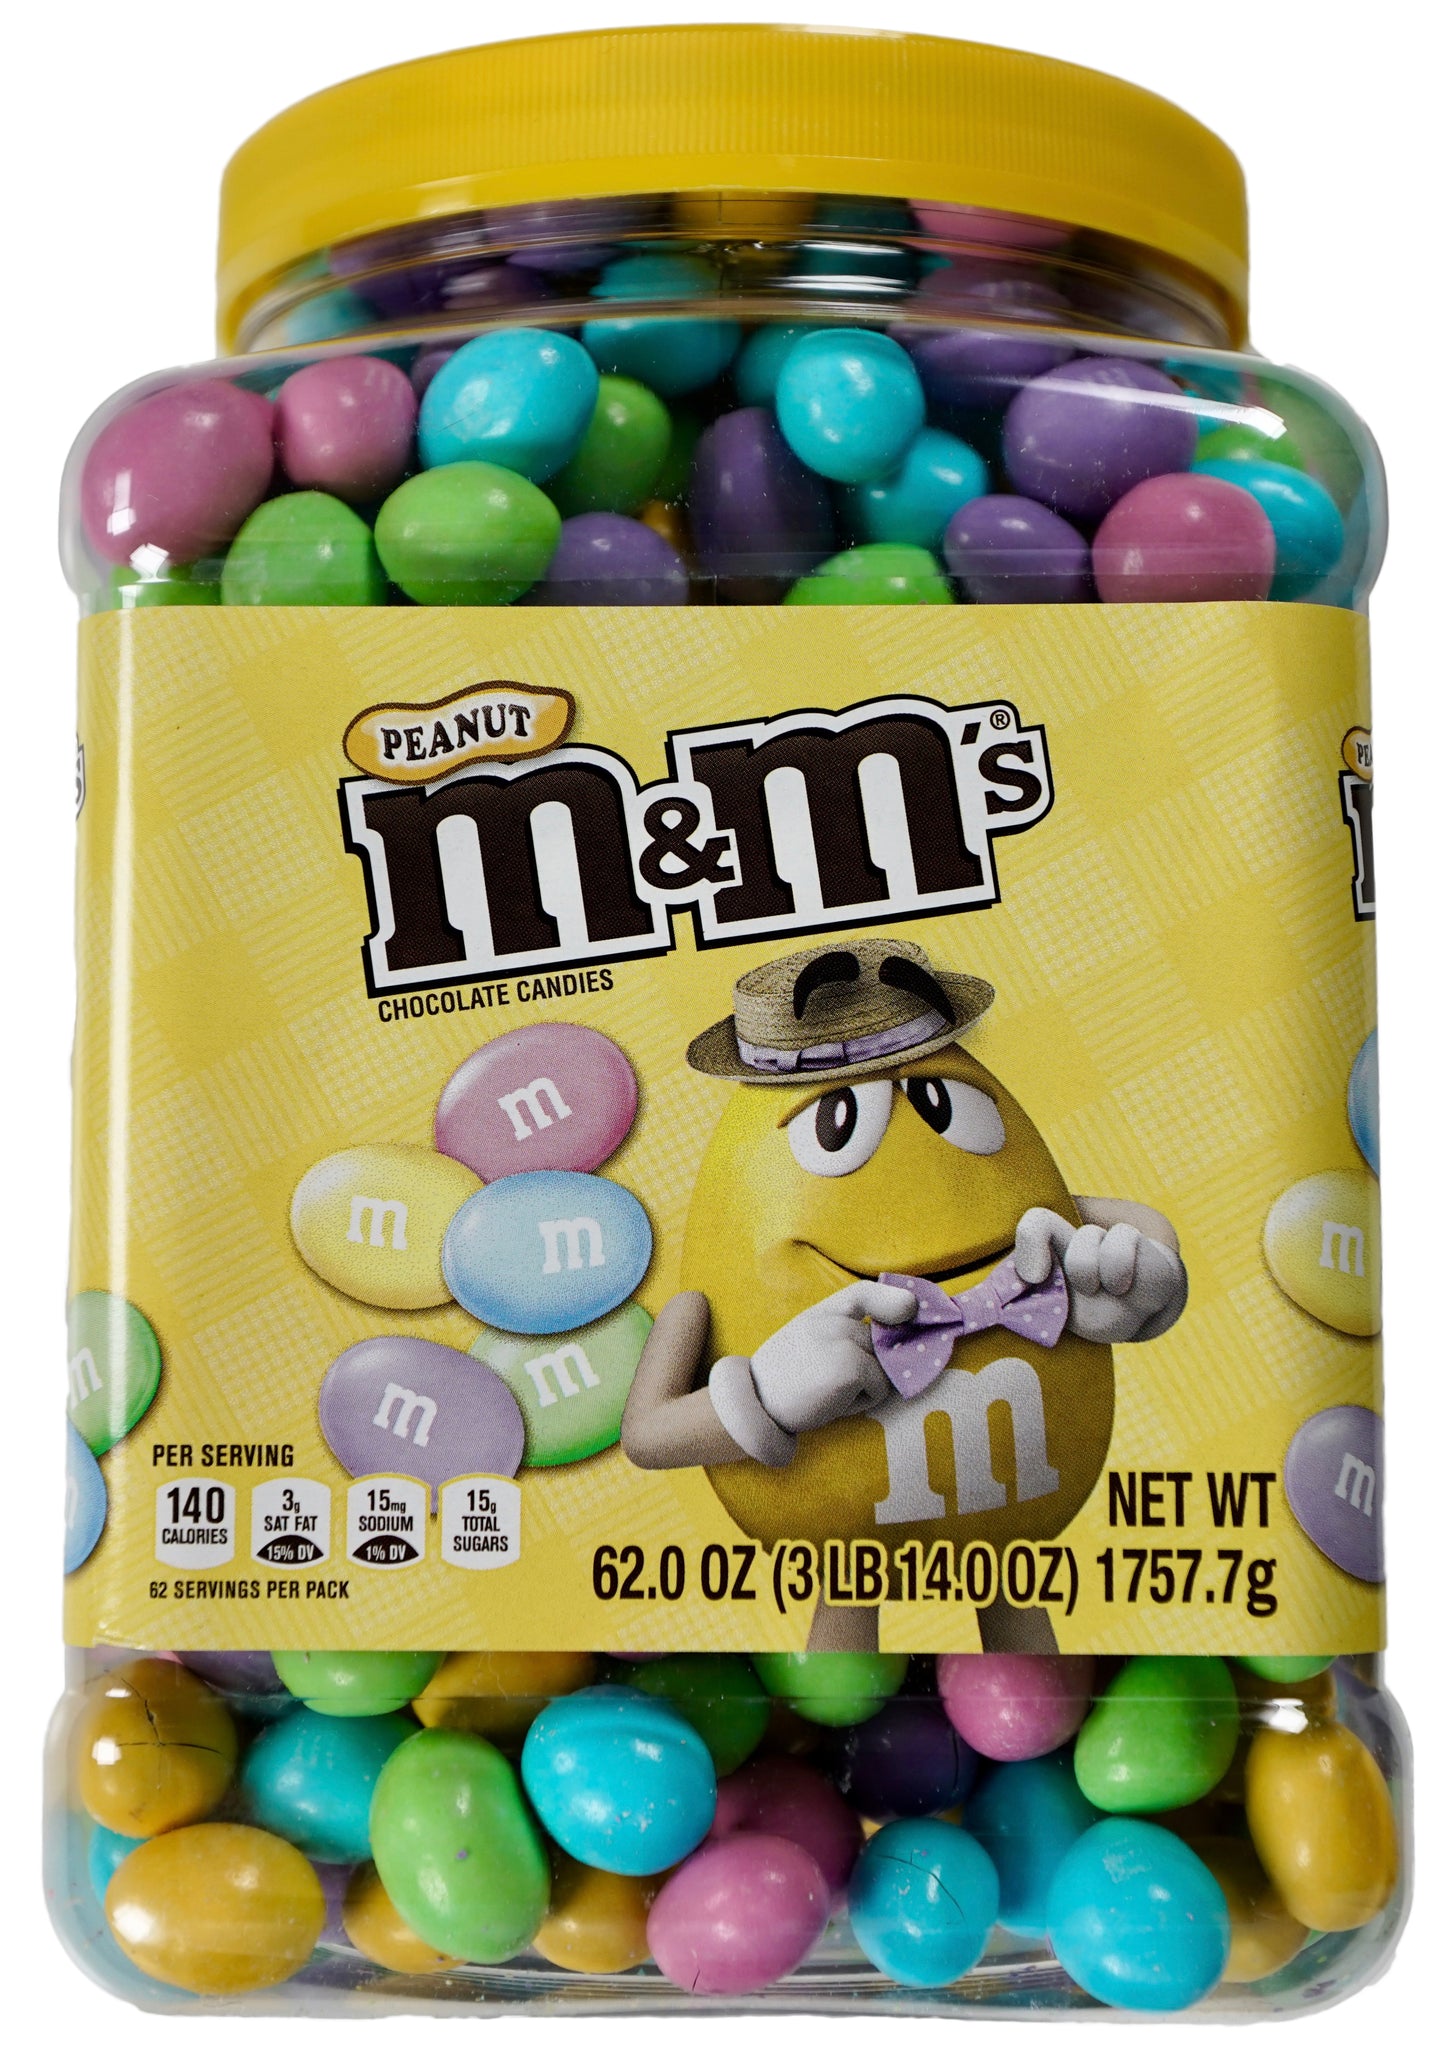 M&Ms Peanut 140g Bag, Chocolates